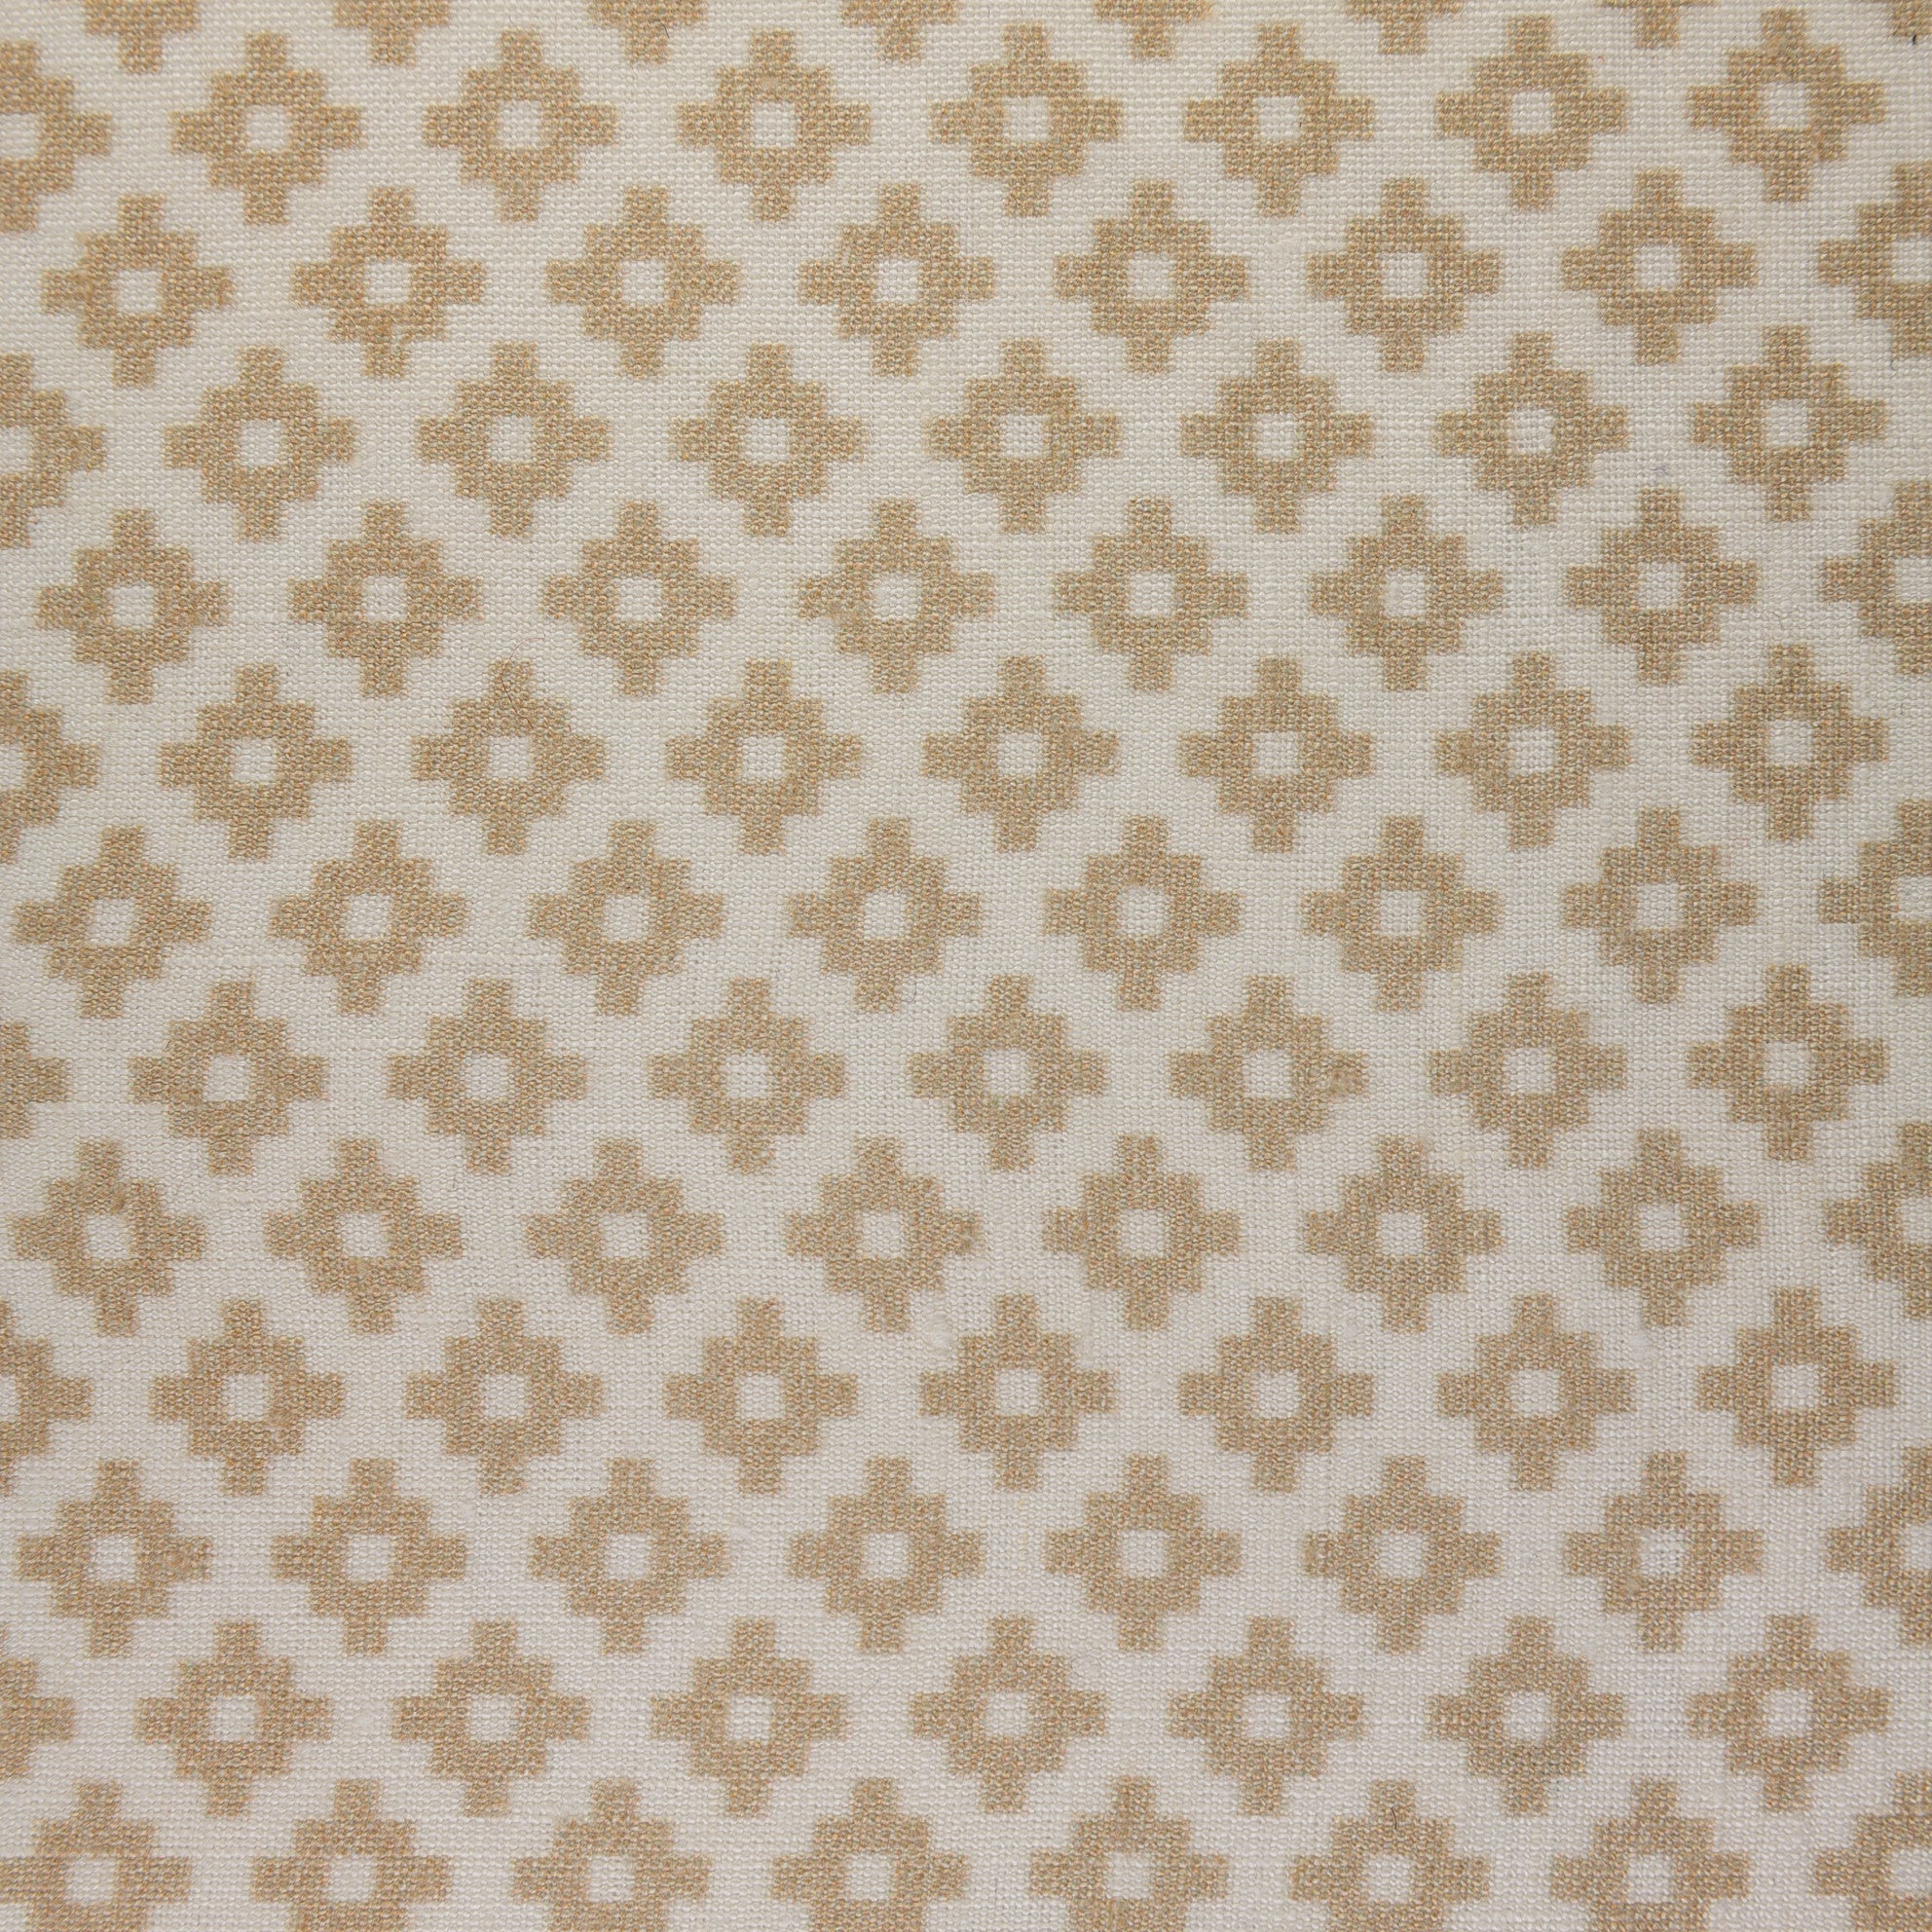 Geometric Print Fabric - Falmouth 49/049 Oatmeal Two